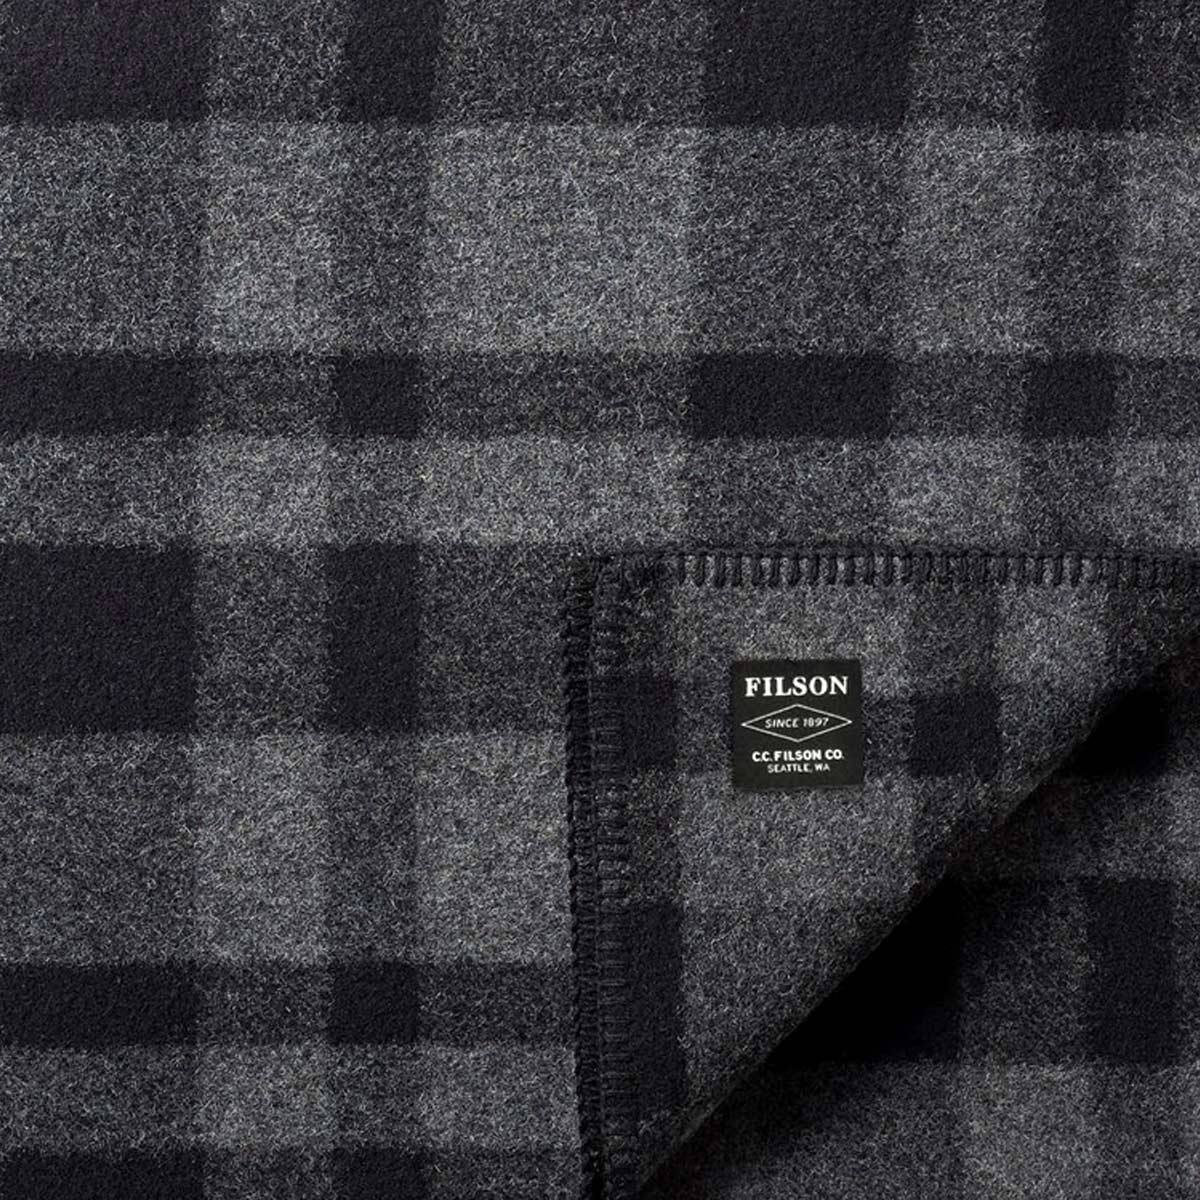 Filson Mackinaw Wool Blanket 11080110-Gray Black, keeps you warm in any weather